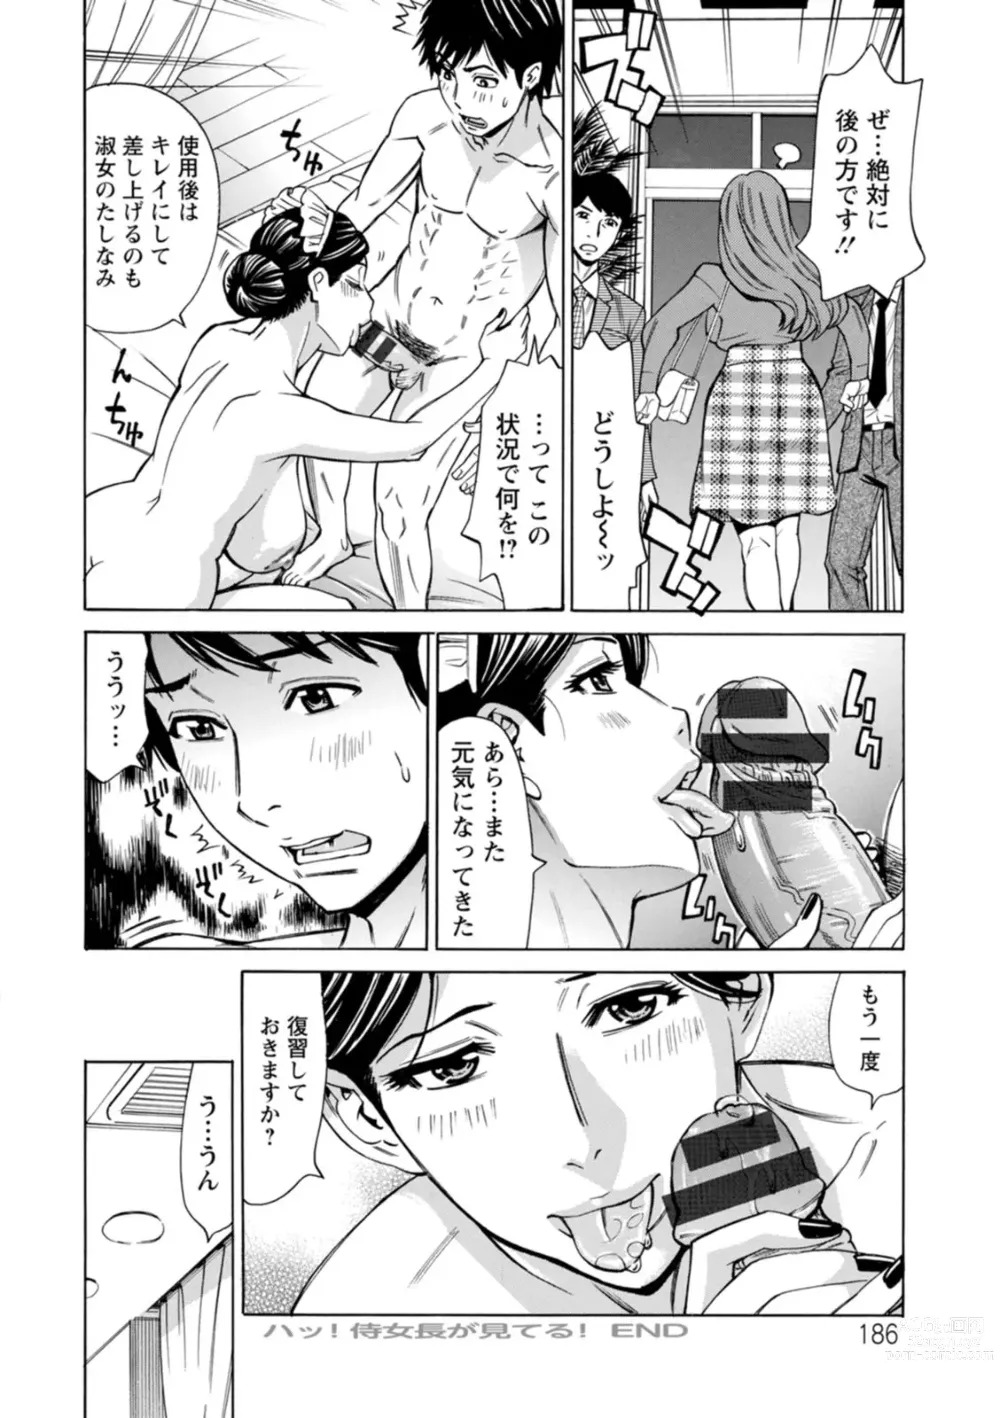 Page 186 of manga Furidashinimodoru - Back to Square One -